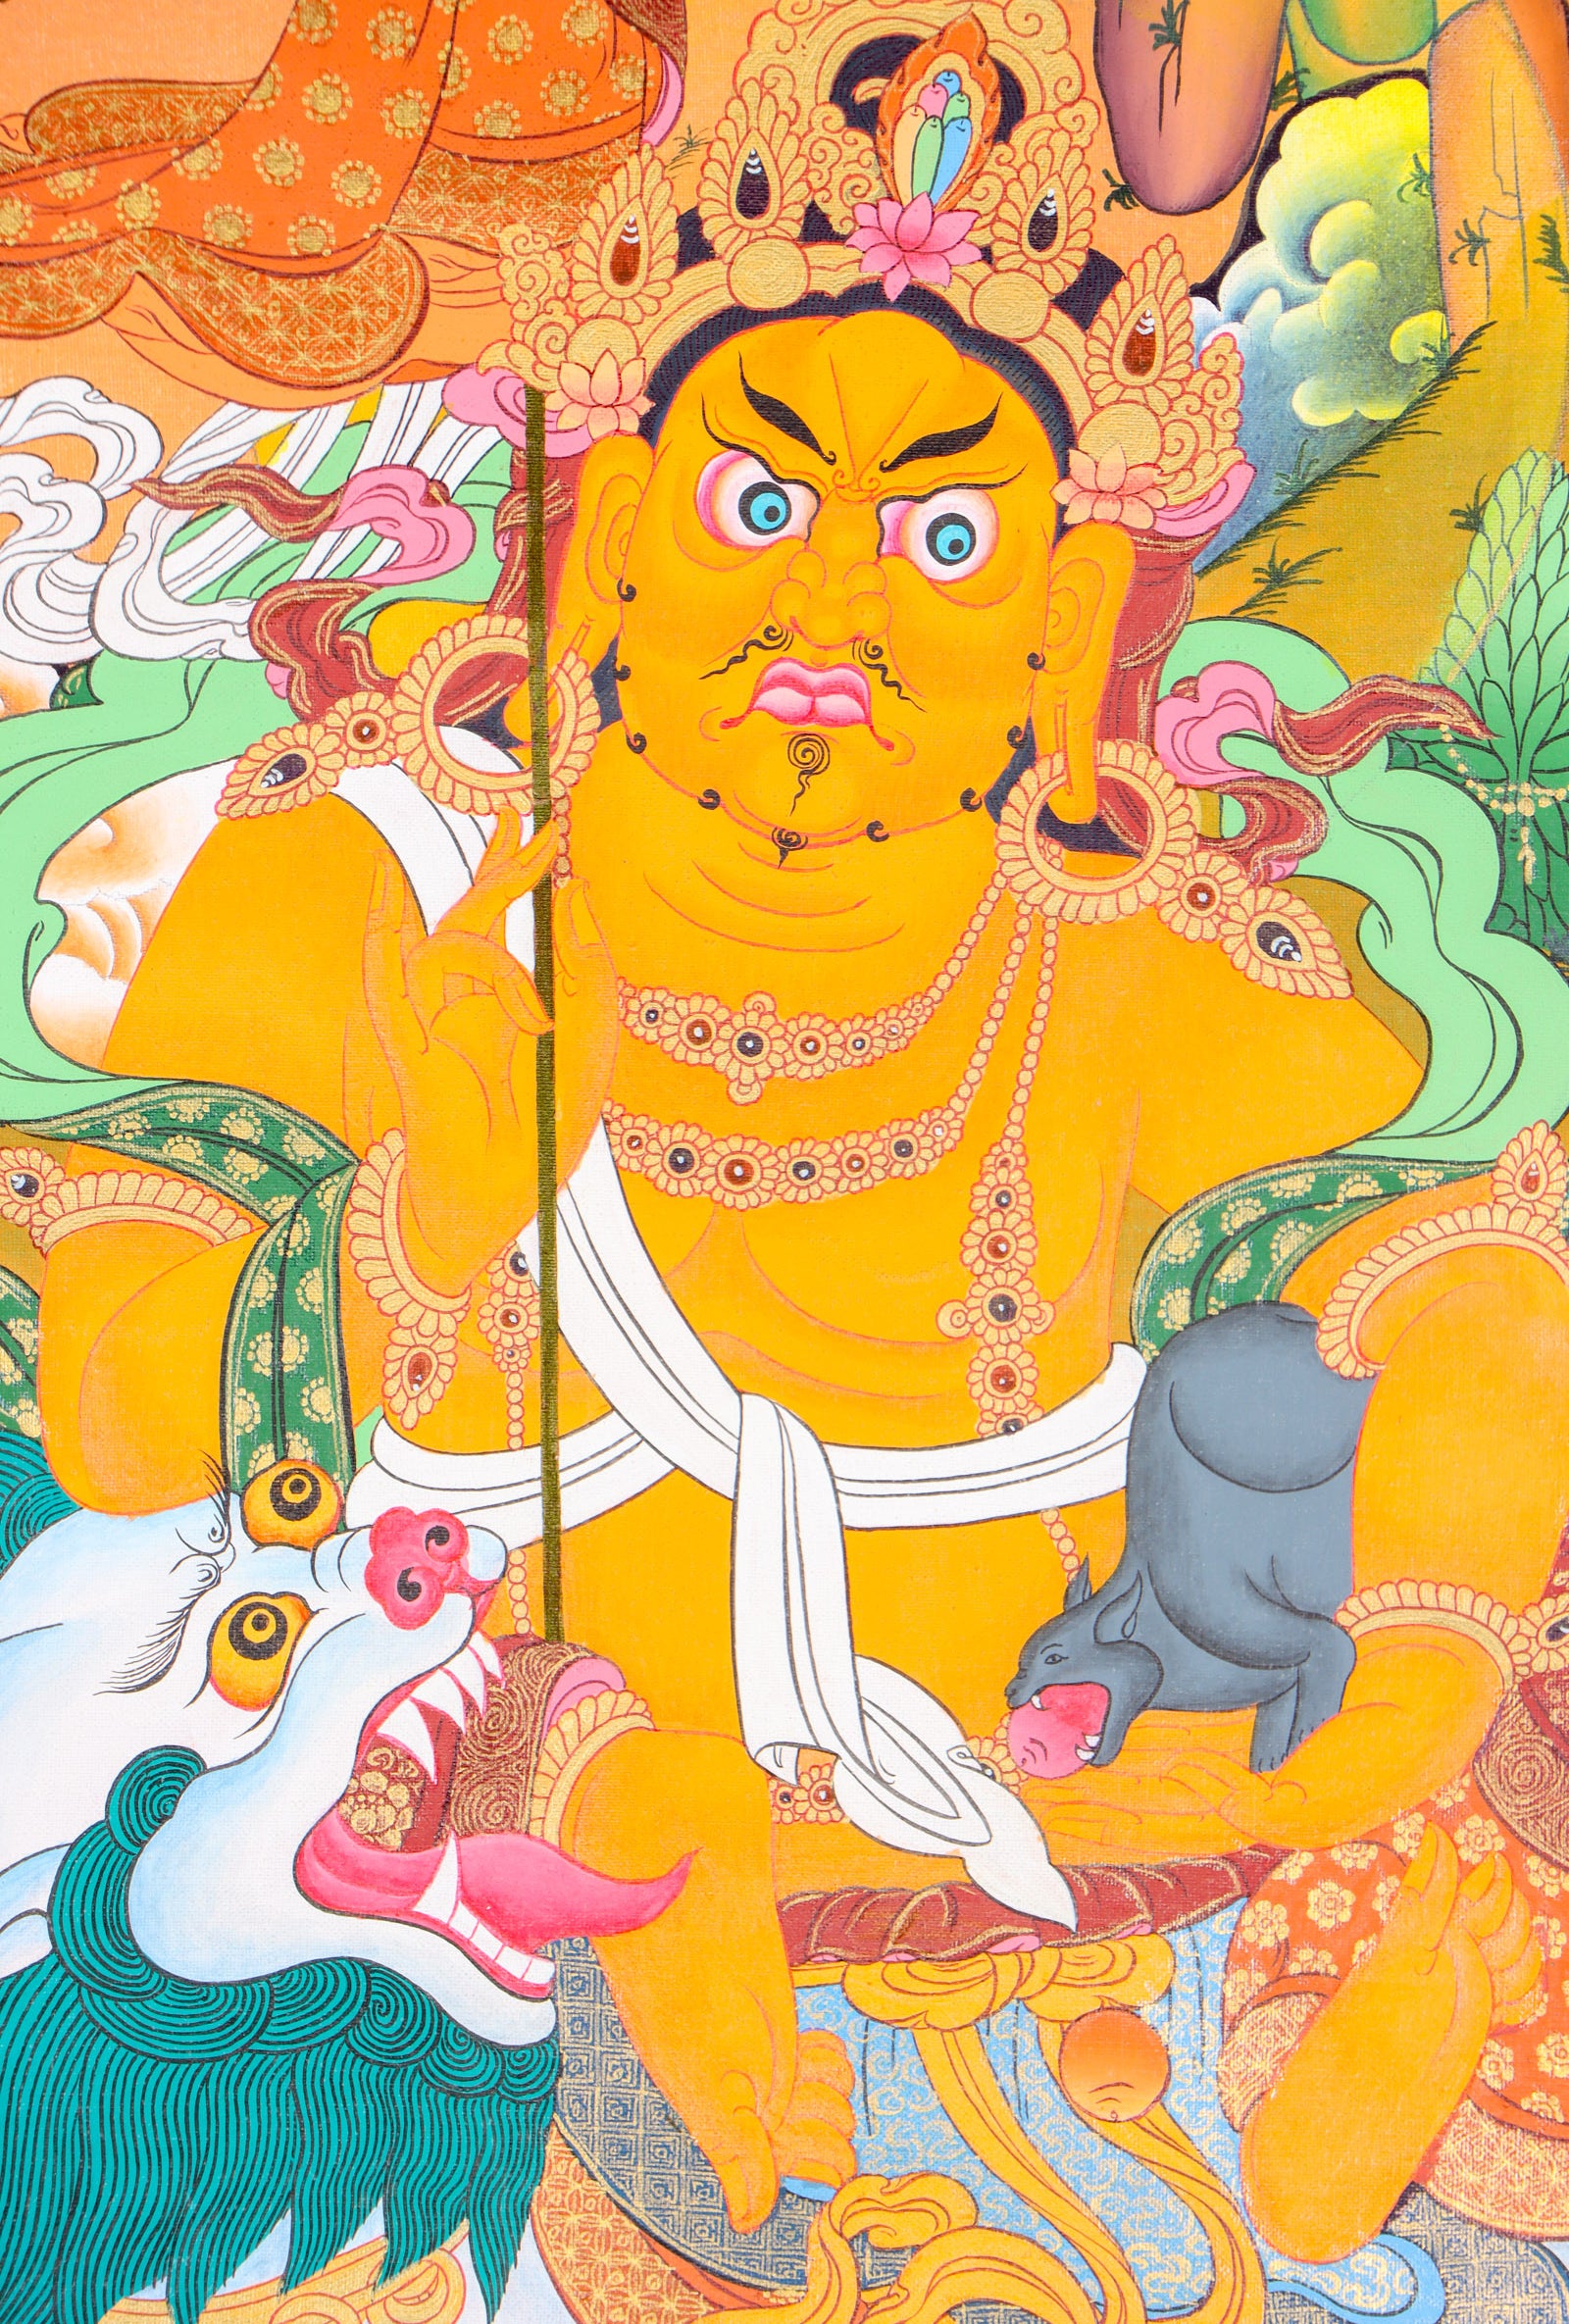 Singha Zambala Thangka Painting for wealth and abundance.